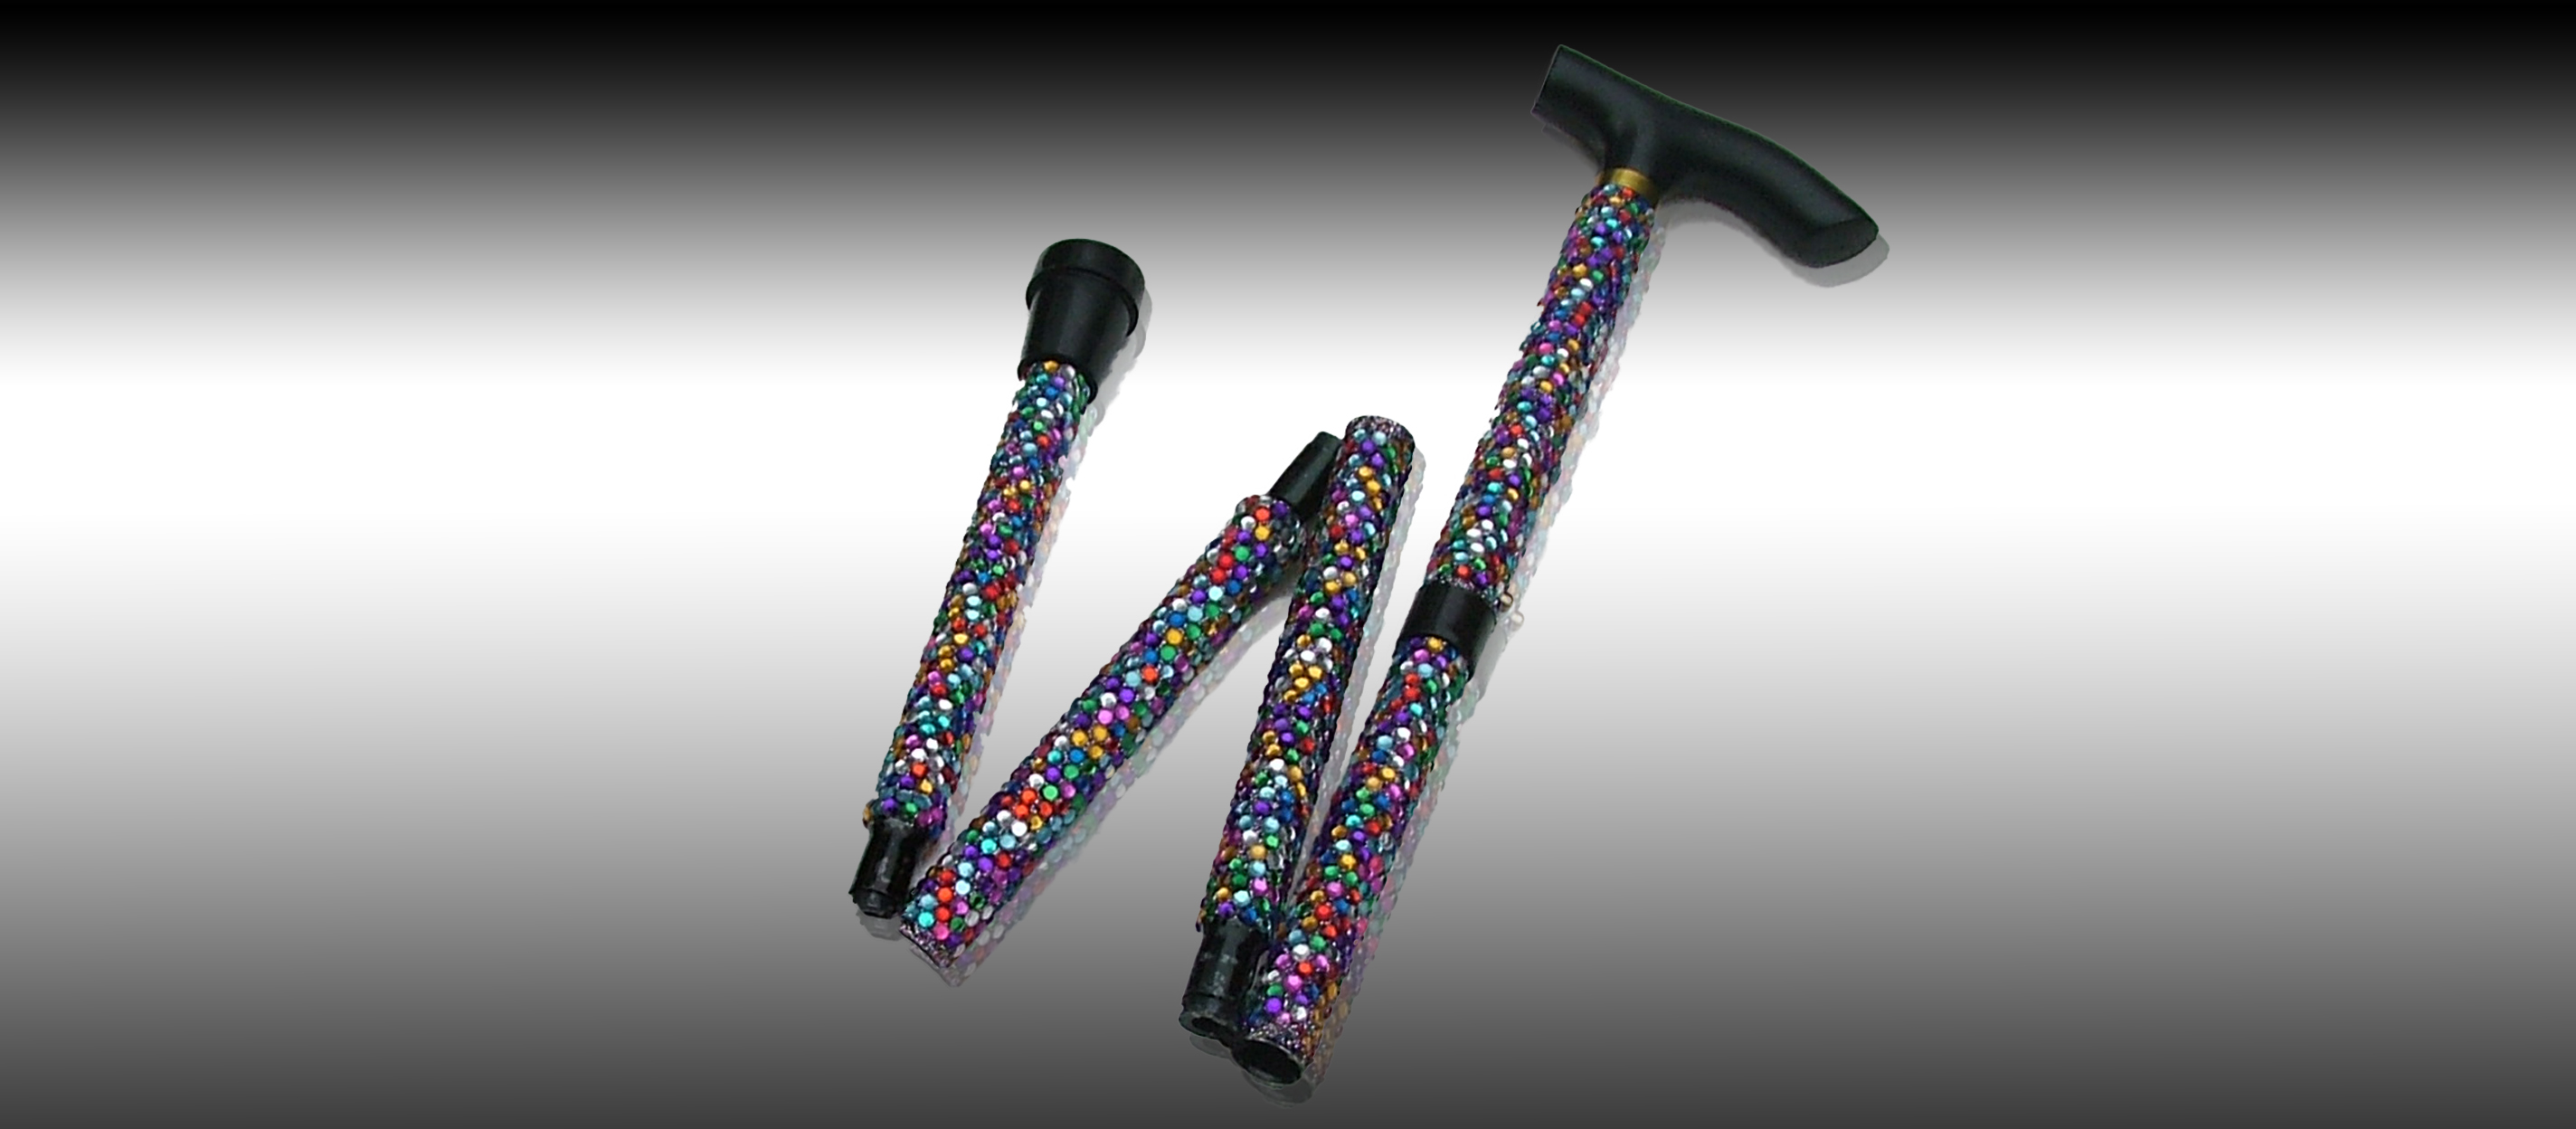 Sparkly rhinestone bling walking stick by Glamsticks, with diamanté